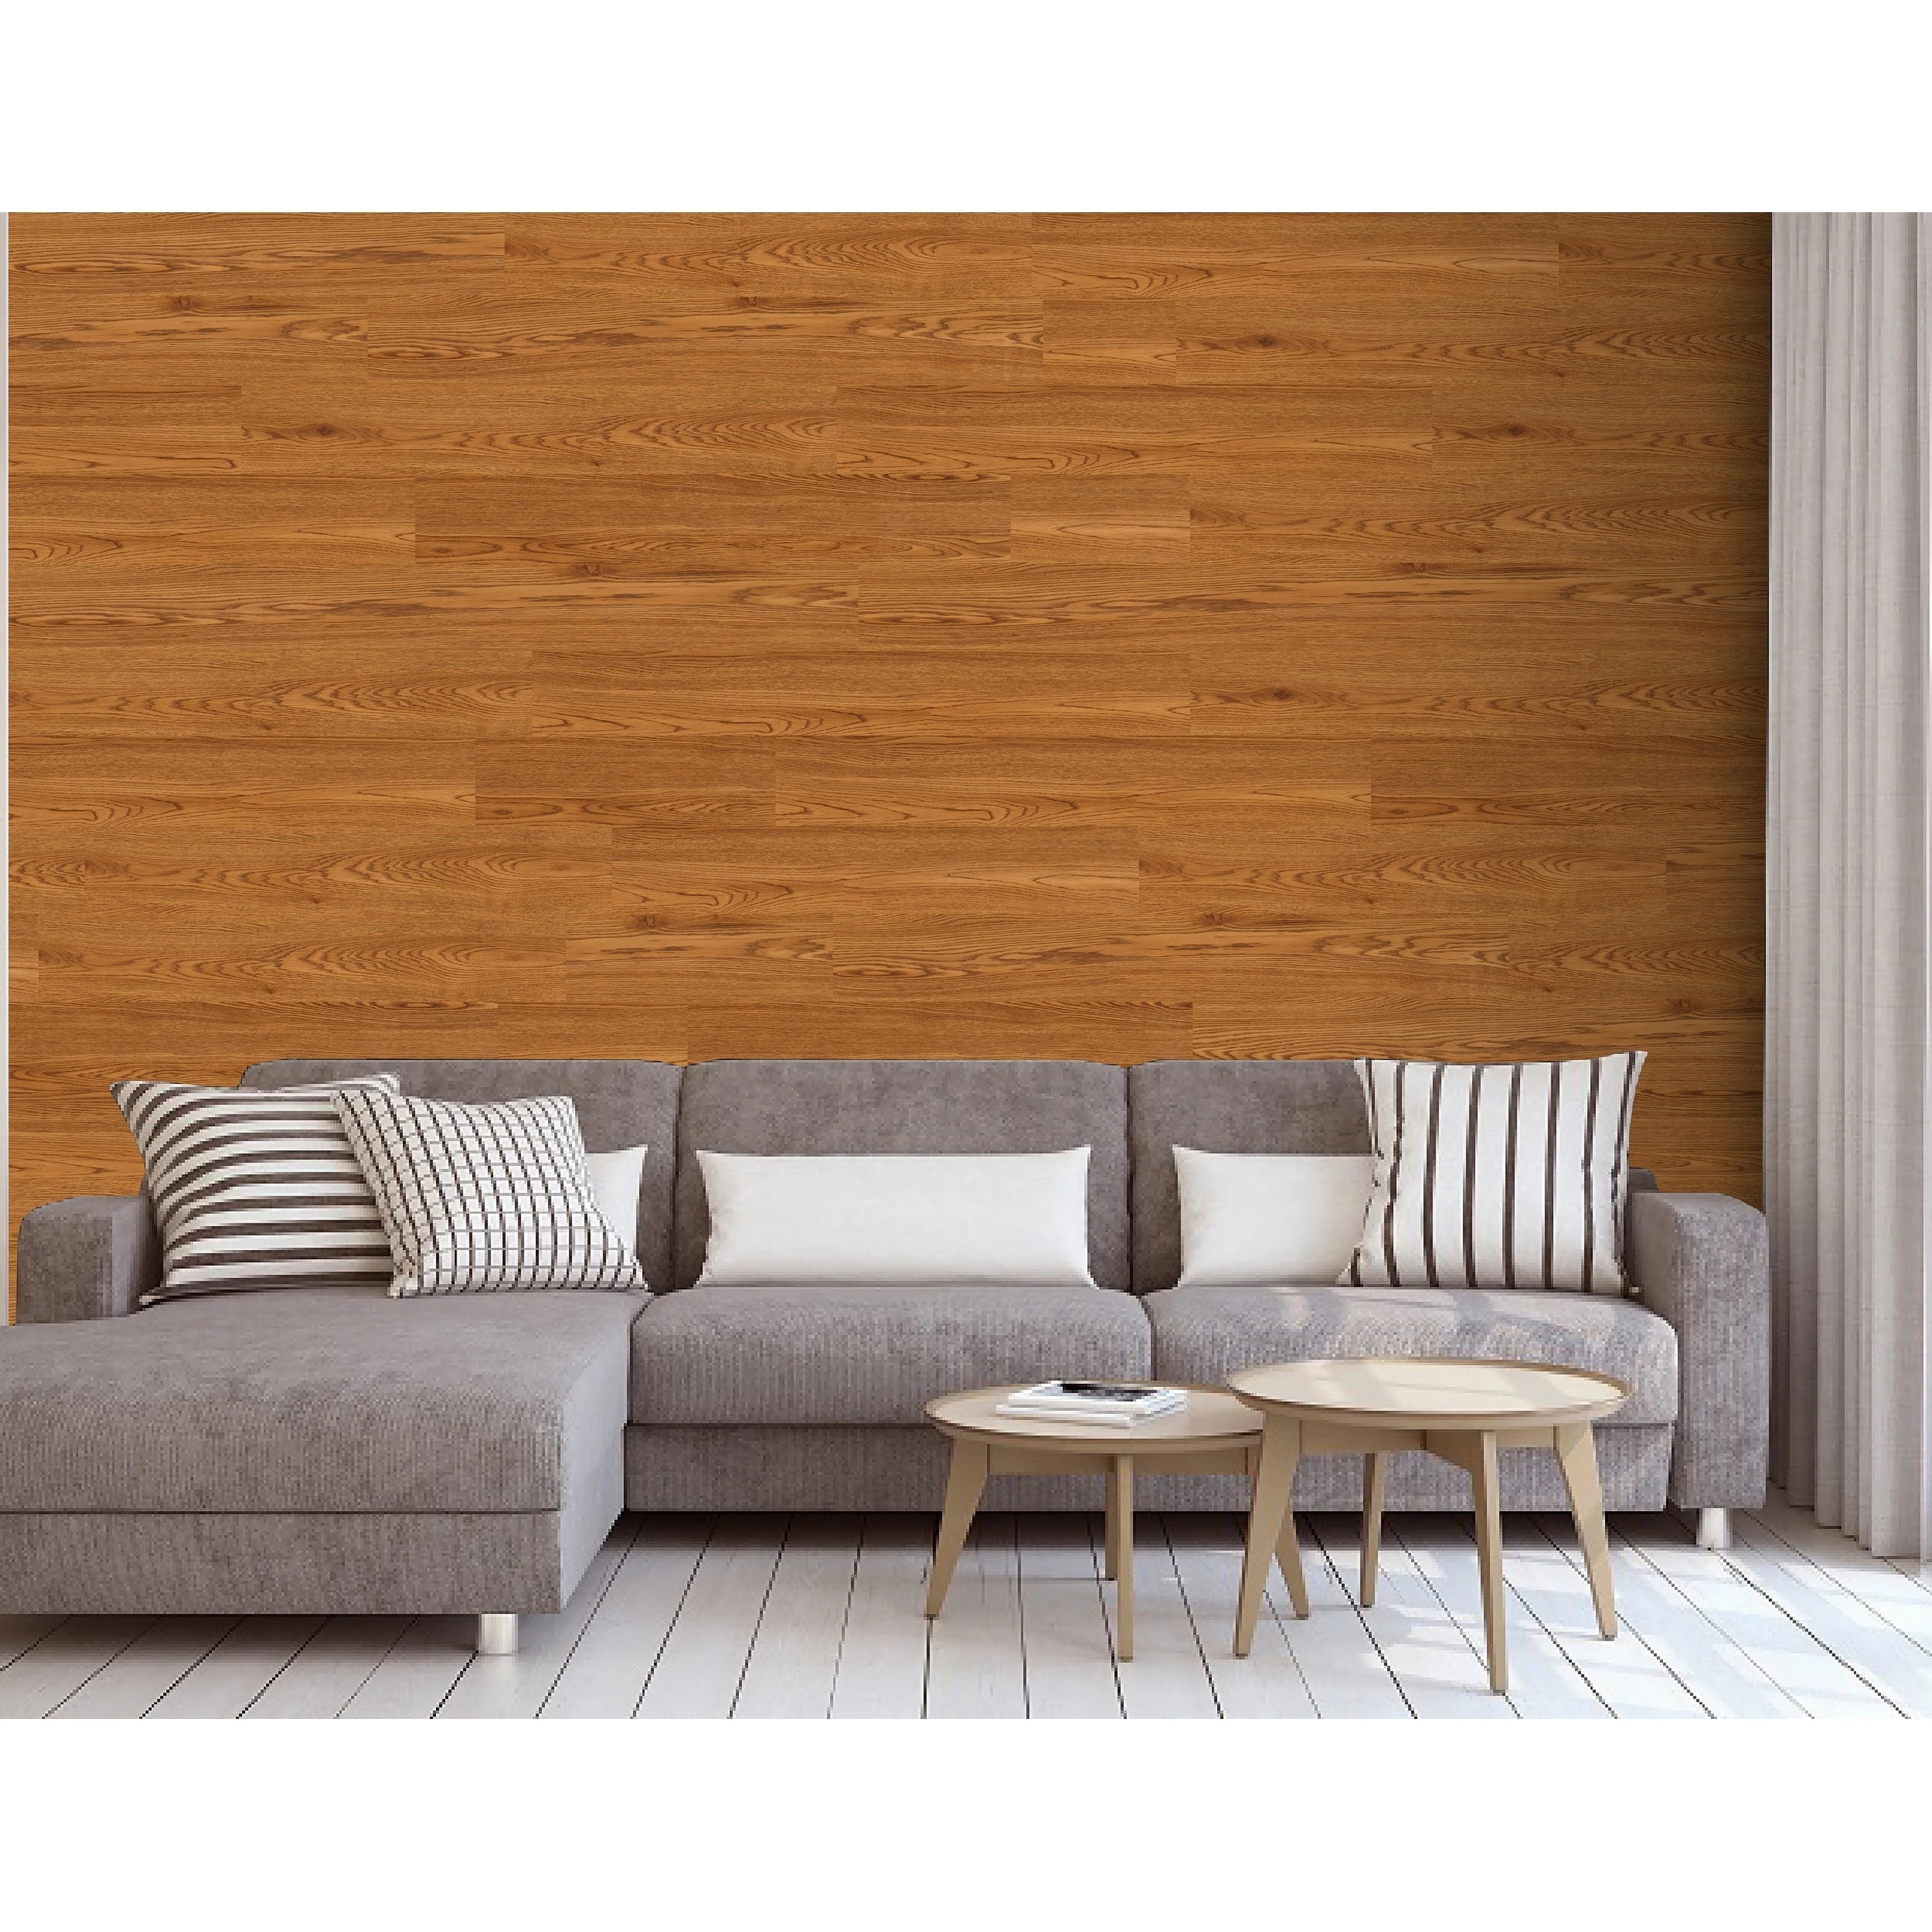 Wood Textured Wall Stickers PVC Wall Decorations Living Room Self-adhesive  Roll Waterproof Flooring Sticker Modern Wallpaper New